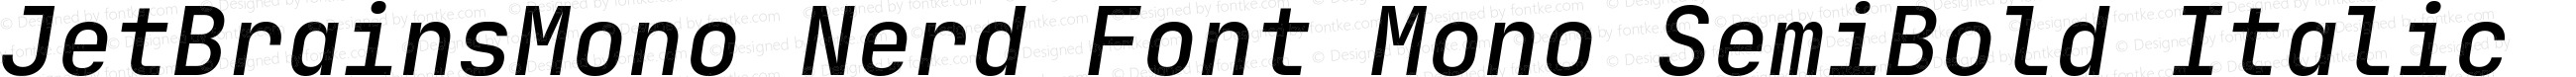 JetBrains Mono SemiBold Italic Nerd Font Complete Mono